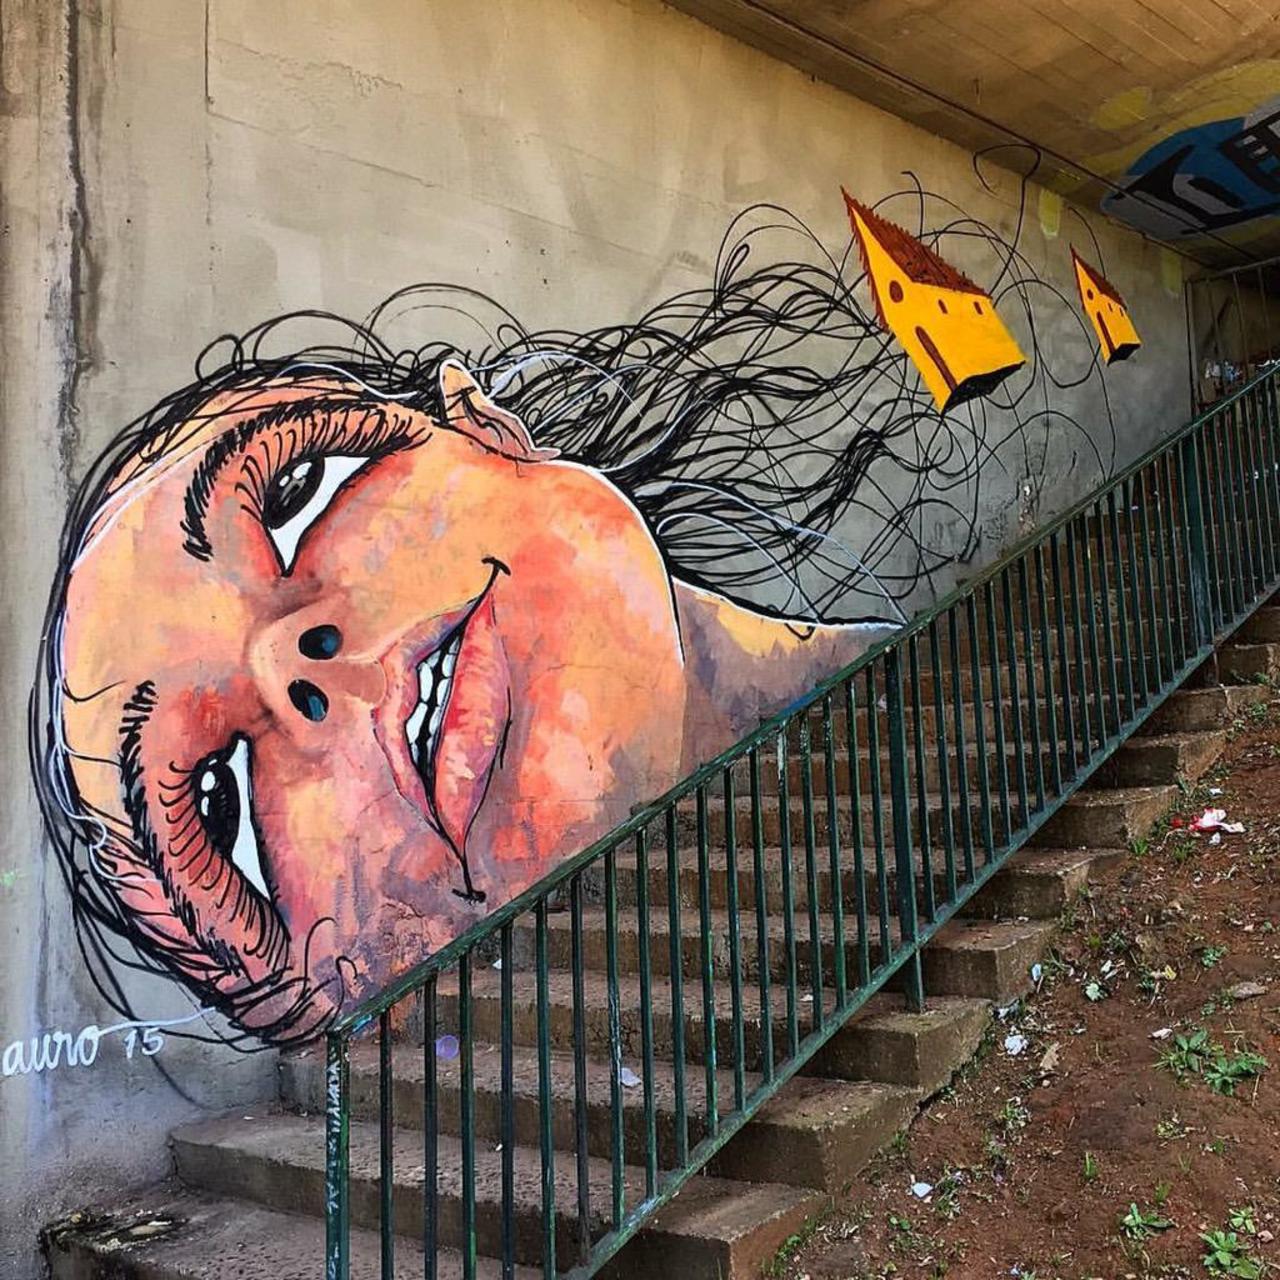 Street Art by Reveracidade in São Paulo 

#art #graffiti #mural #streetart http://t.co/1QTc8vGQ5a